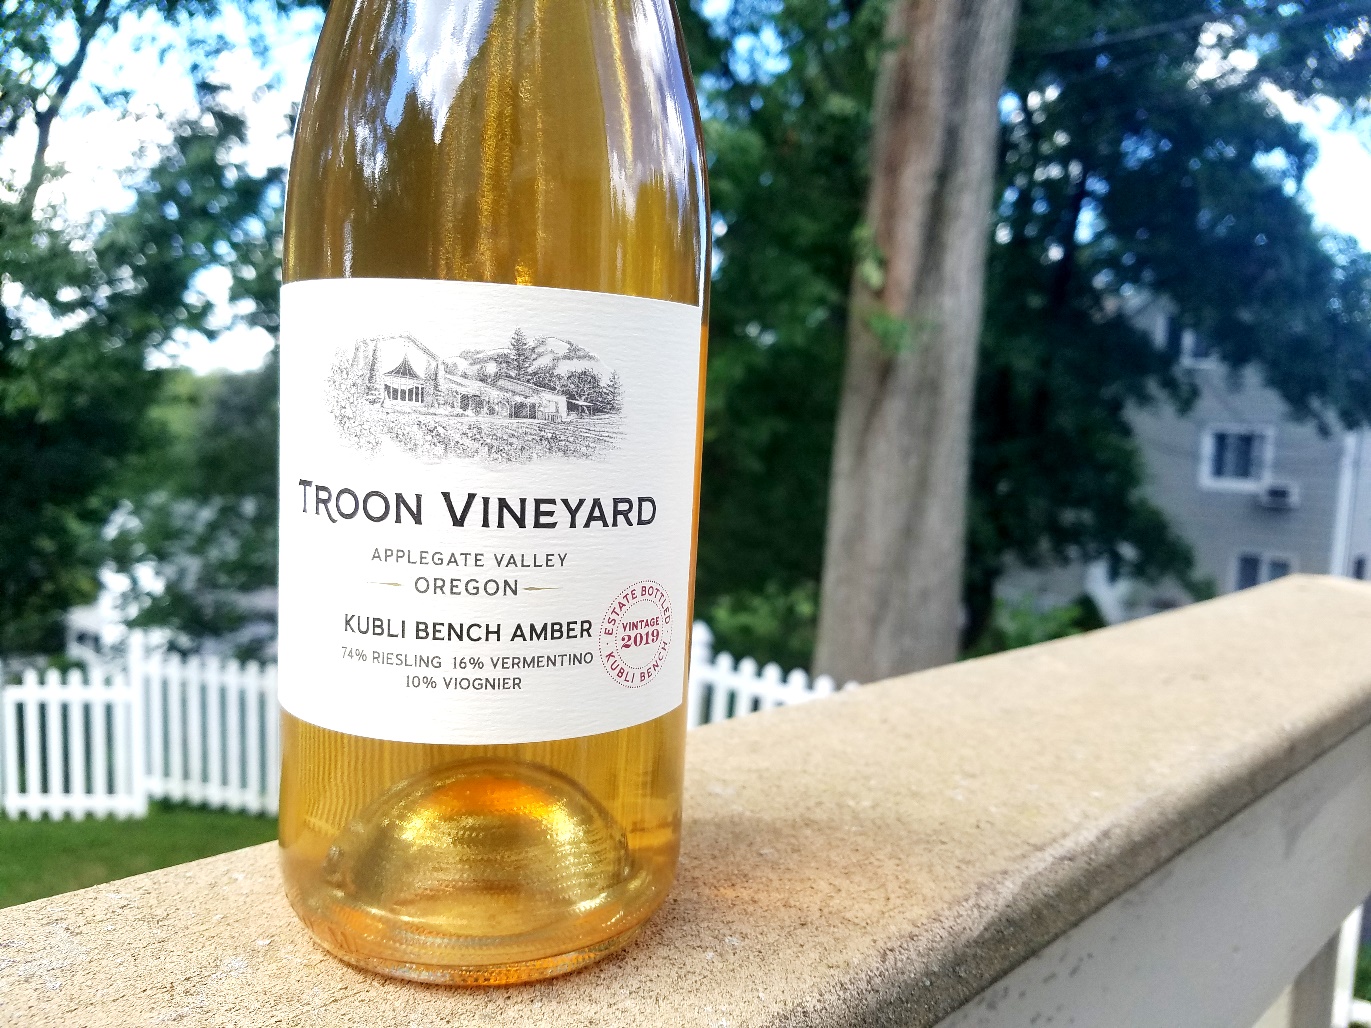 Troon Vineyard, Kubli Bench Amber 2019, Applegate Valley, Oregon, Wine Casual